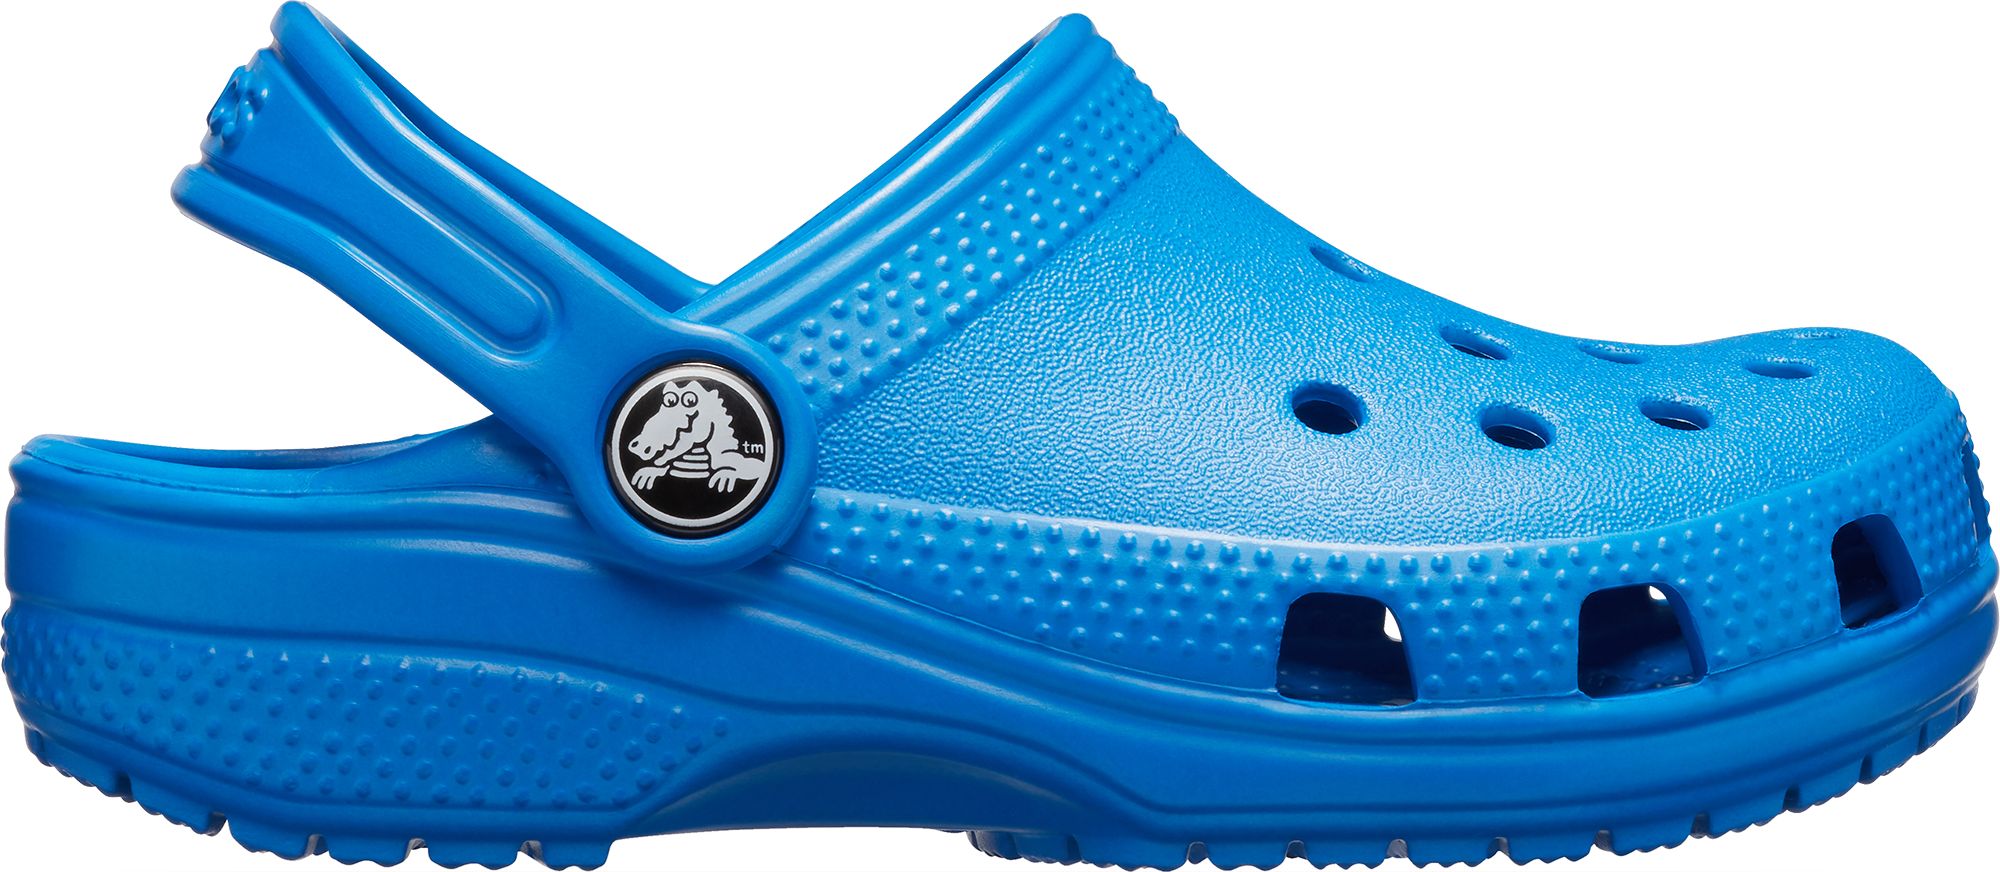 Blue Crocs Shoes | Best Price Guarantee 